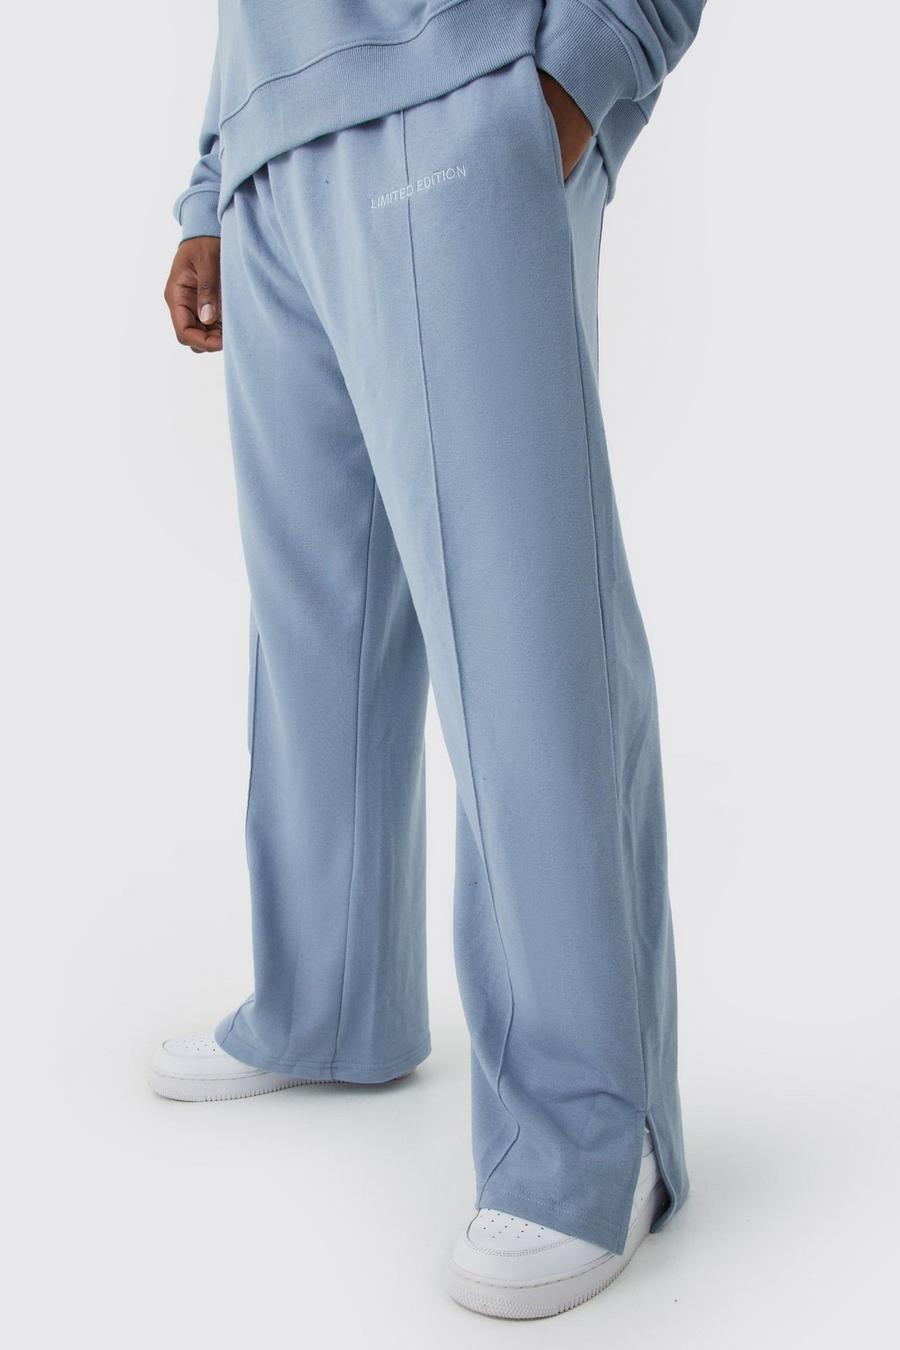 Pantaloni tuta pesanti Plus Size rilassati con spacco sul fondo, Dusty blue image number 1